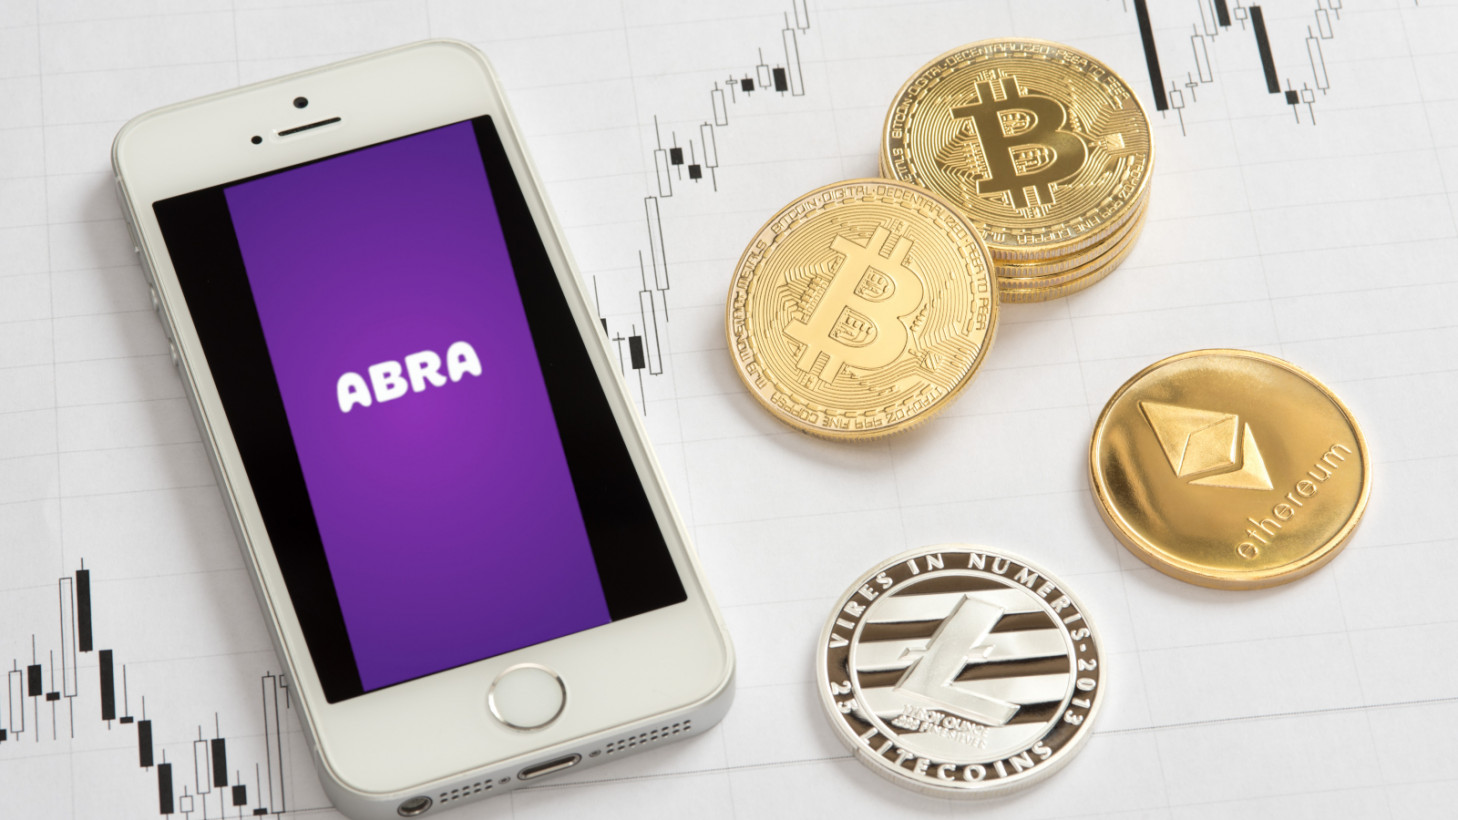 Abra token cryptocurrency 0122 btc